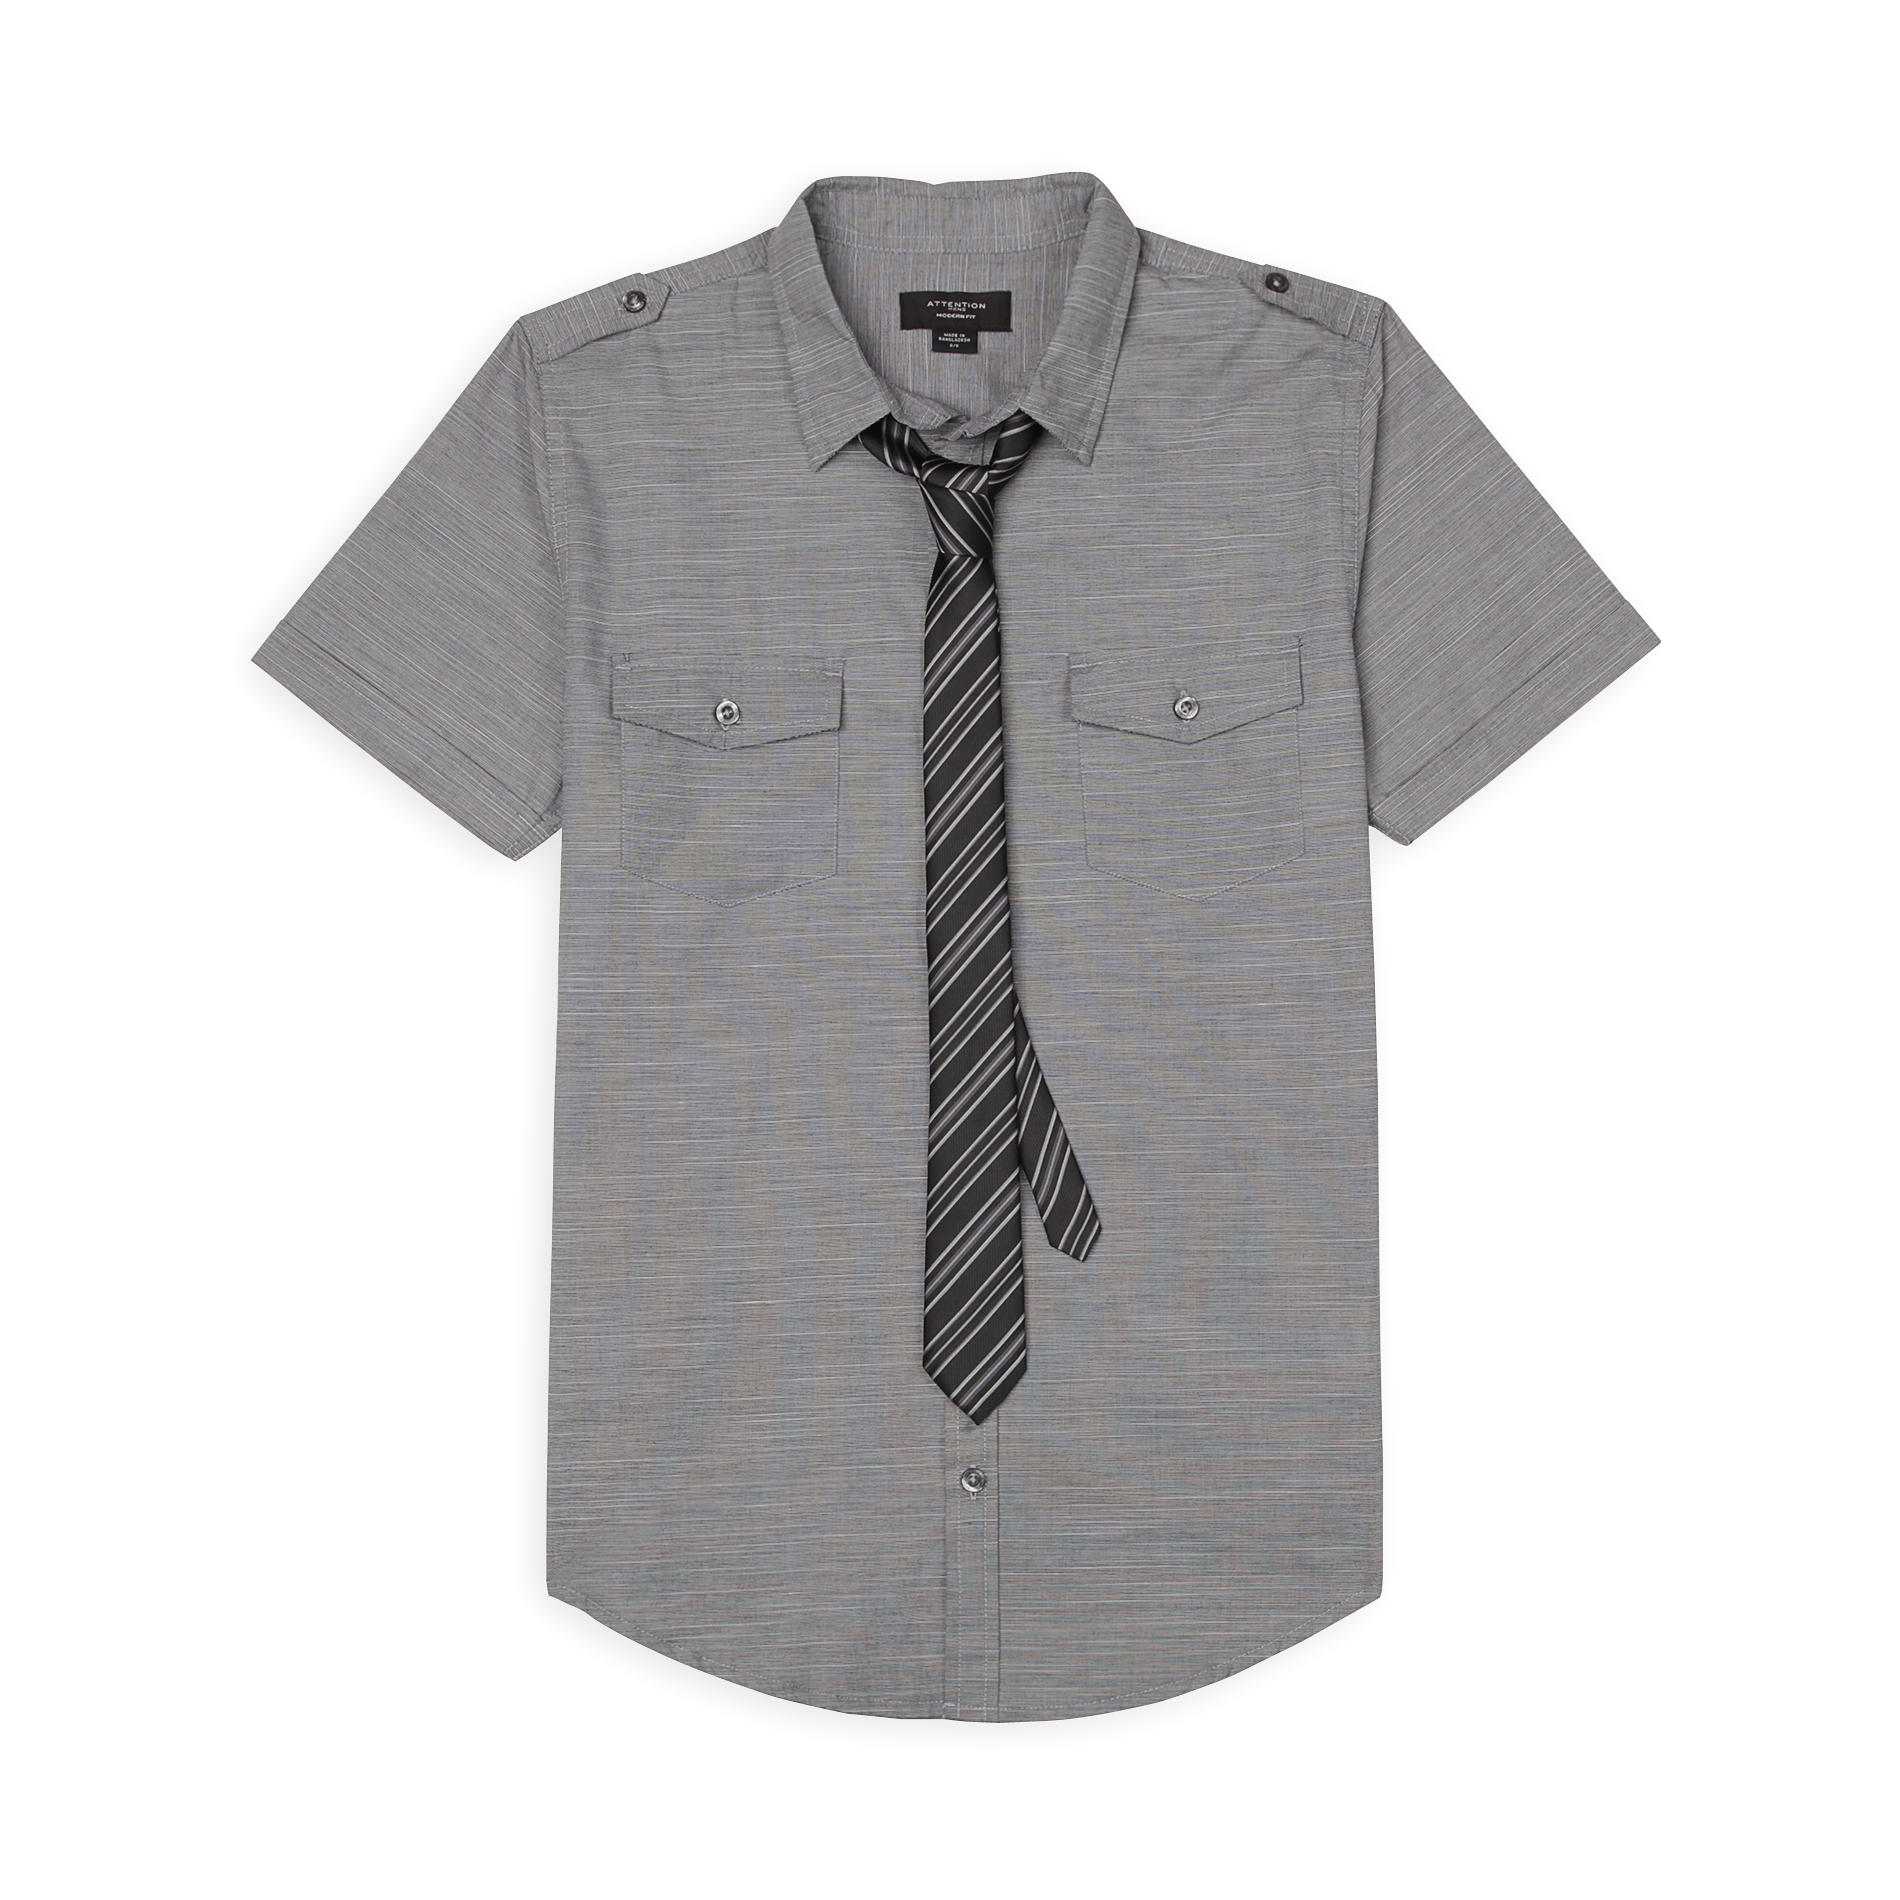 Attention Men's Dress Shirt & Skinny Tie